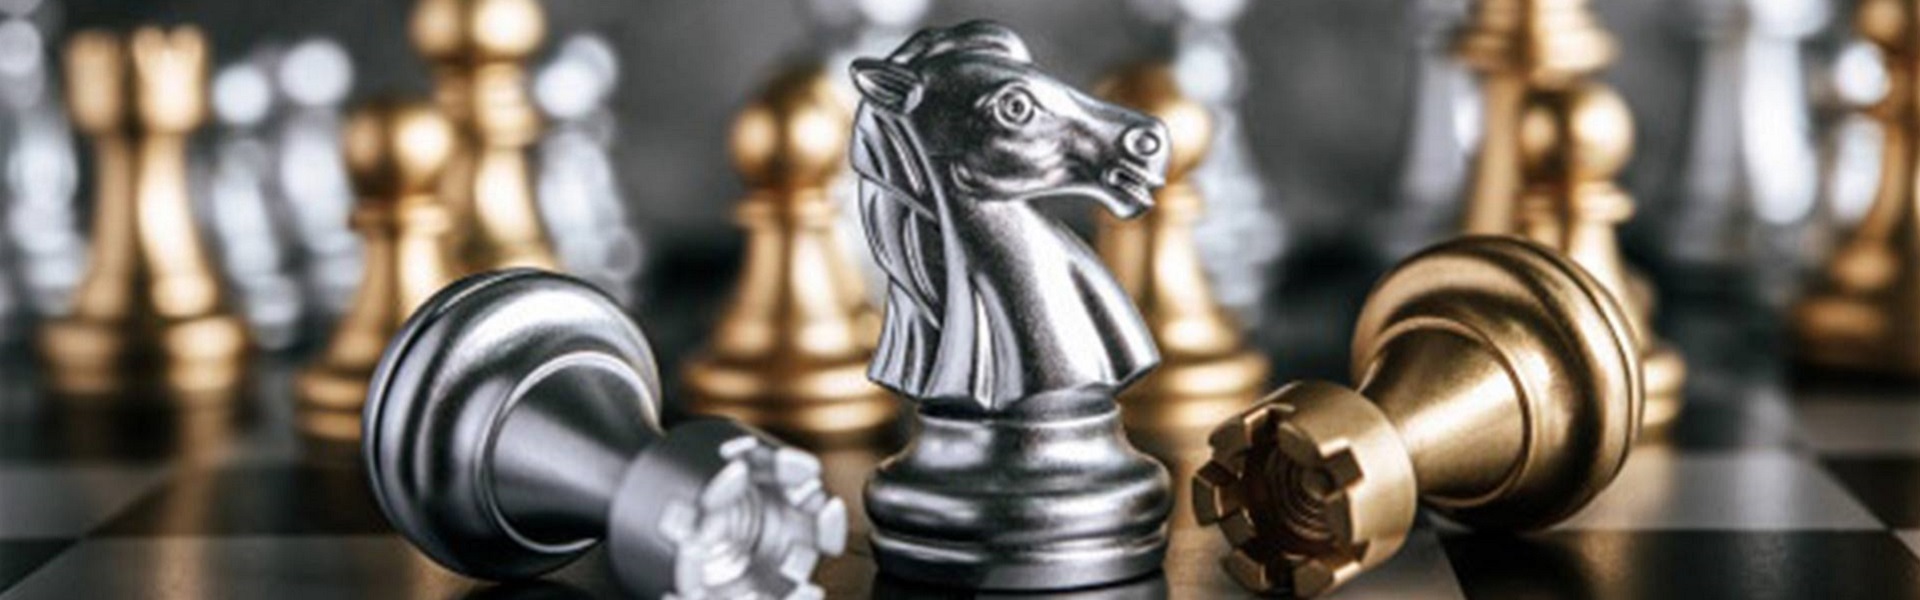 Car rental Beograd |  Chess lessons Dubai & New York